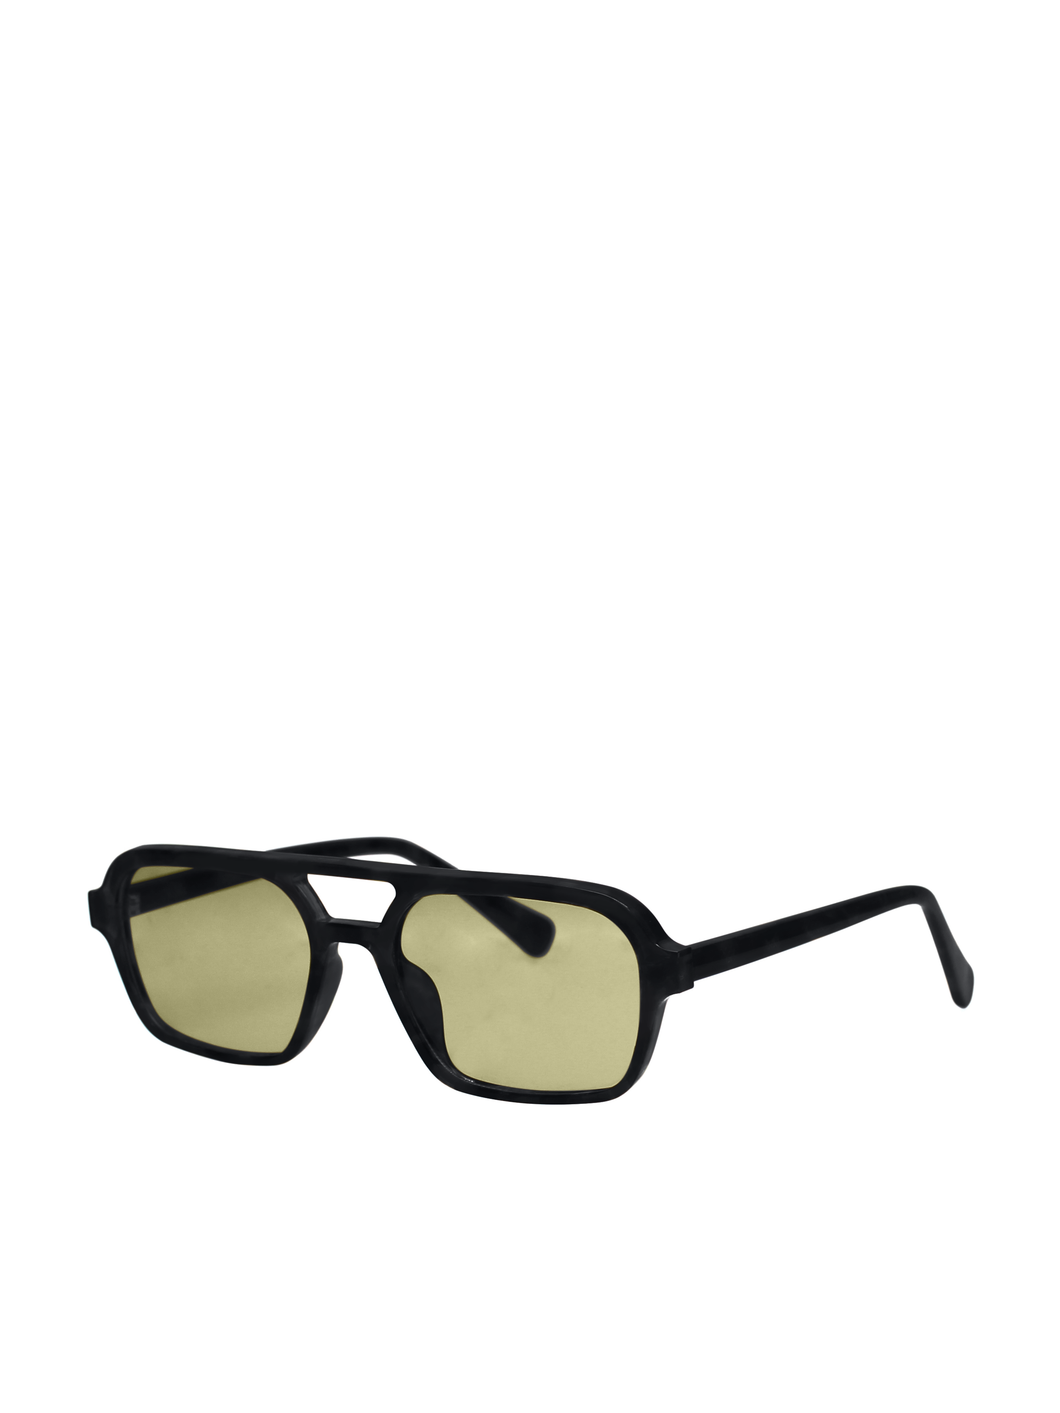 Tomorrowland Sunglasses